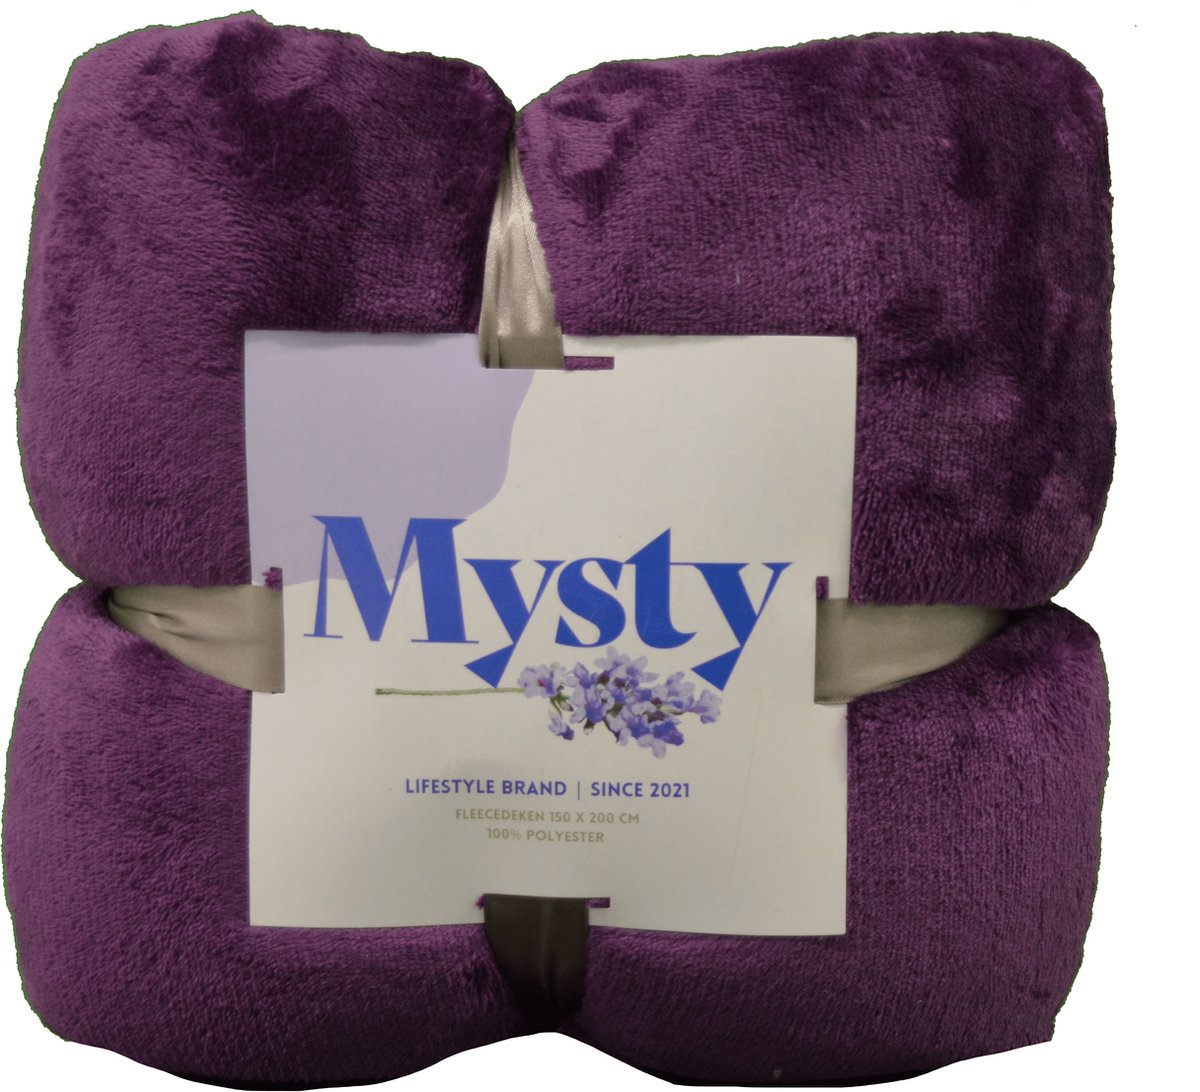 Mysty Plaid Purple 150x200cm 100% polyester